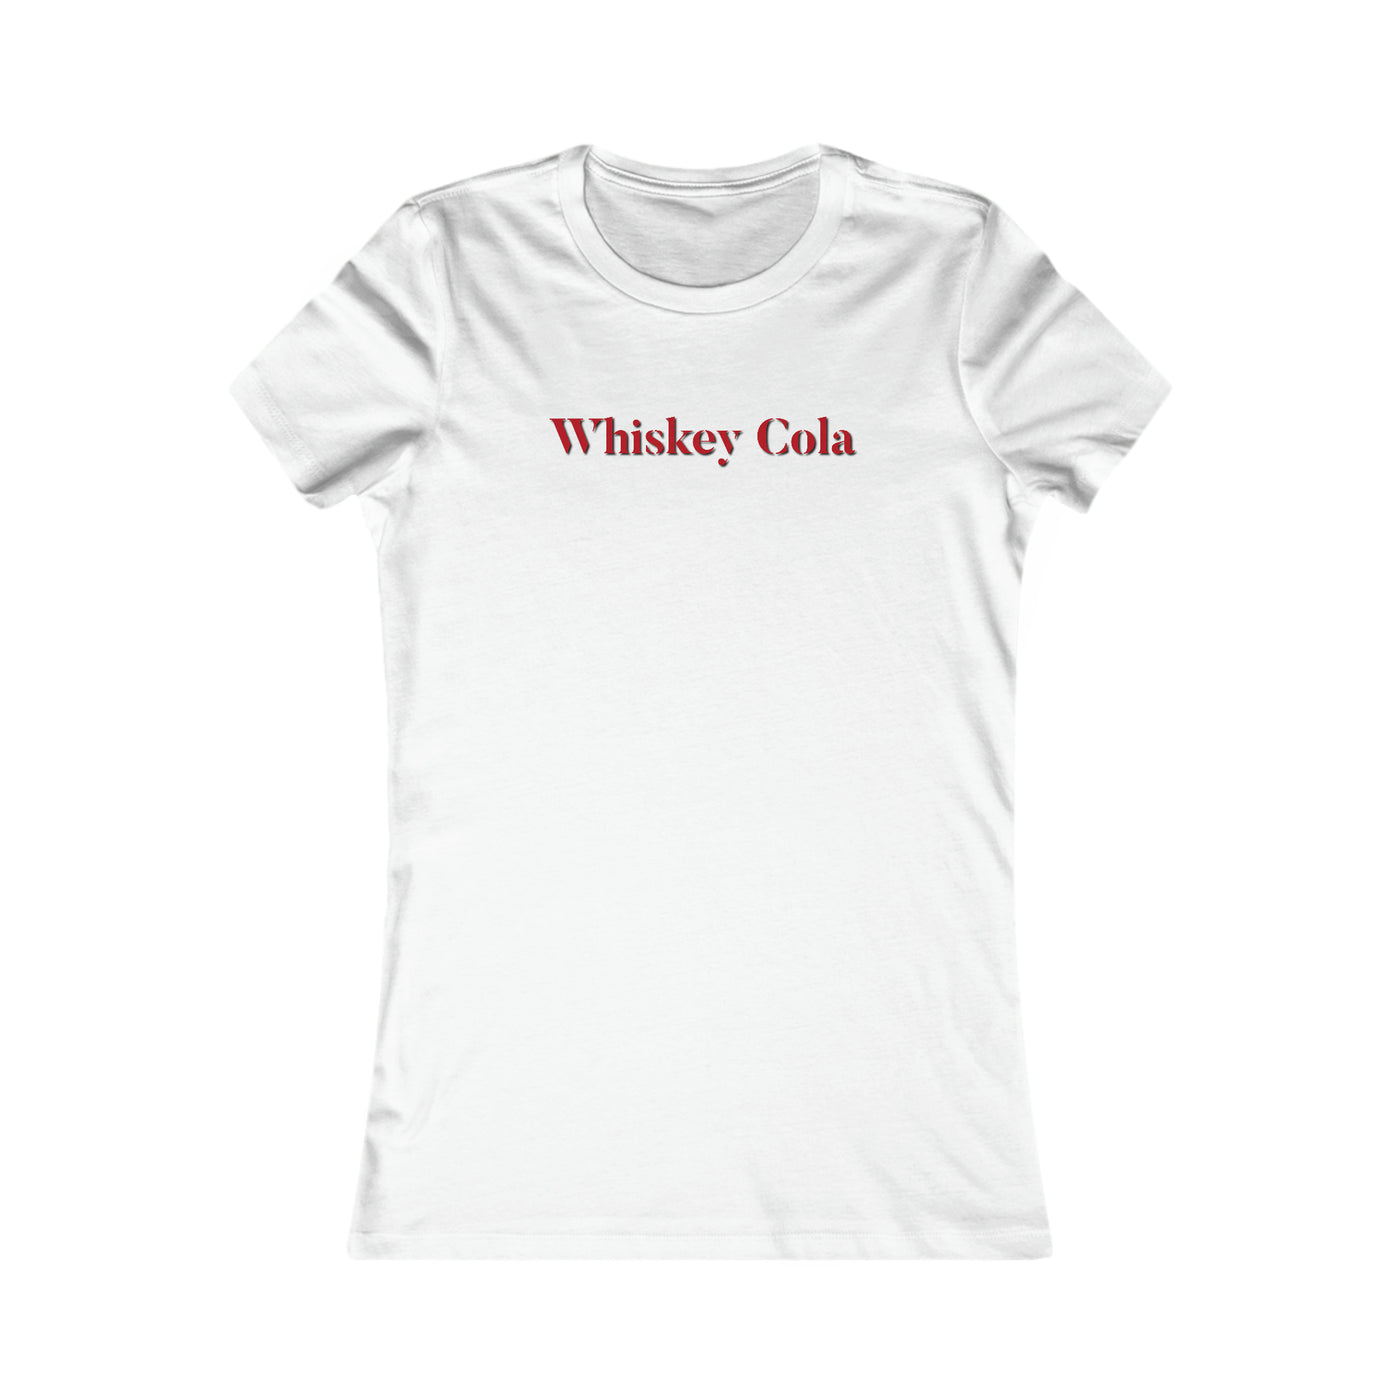 Whiskey Cola Women's Favorite Tee